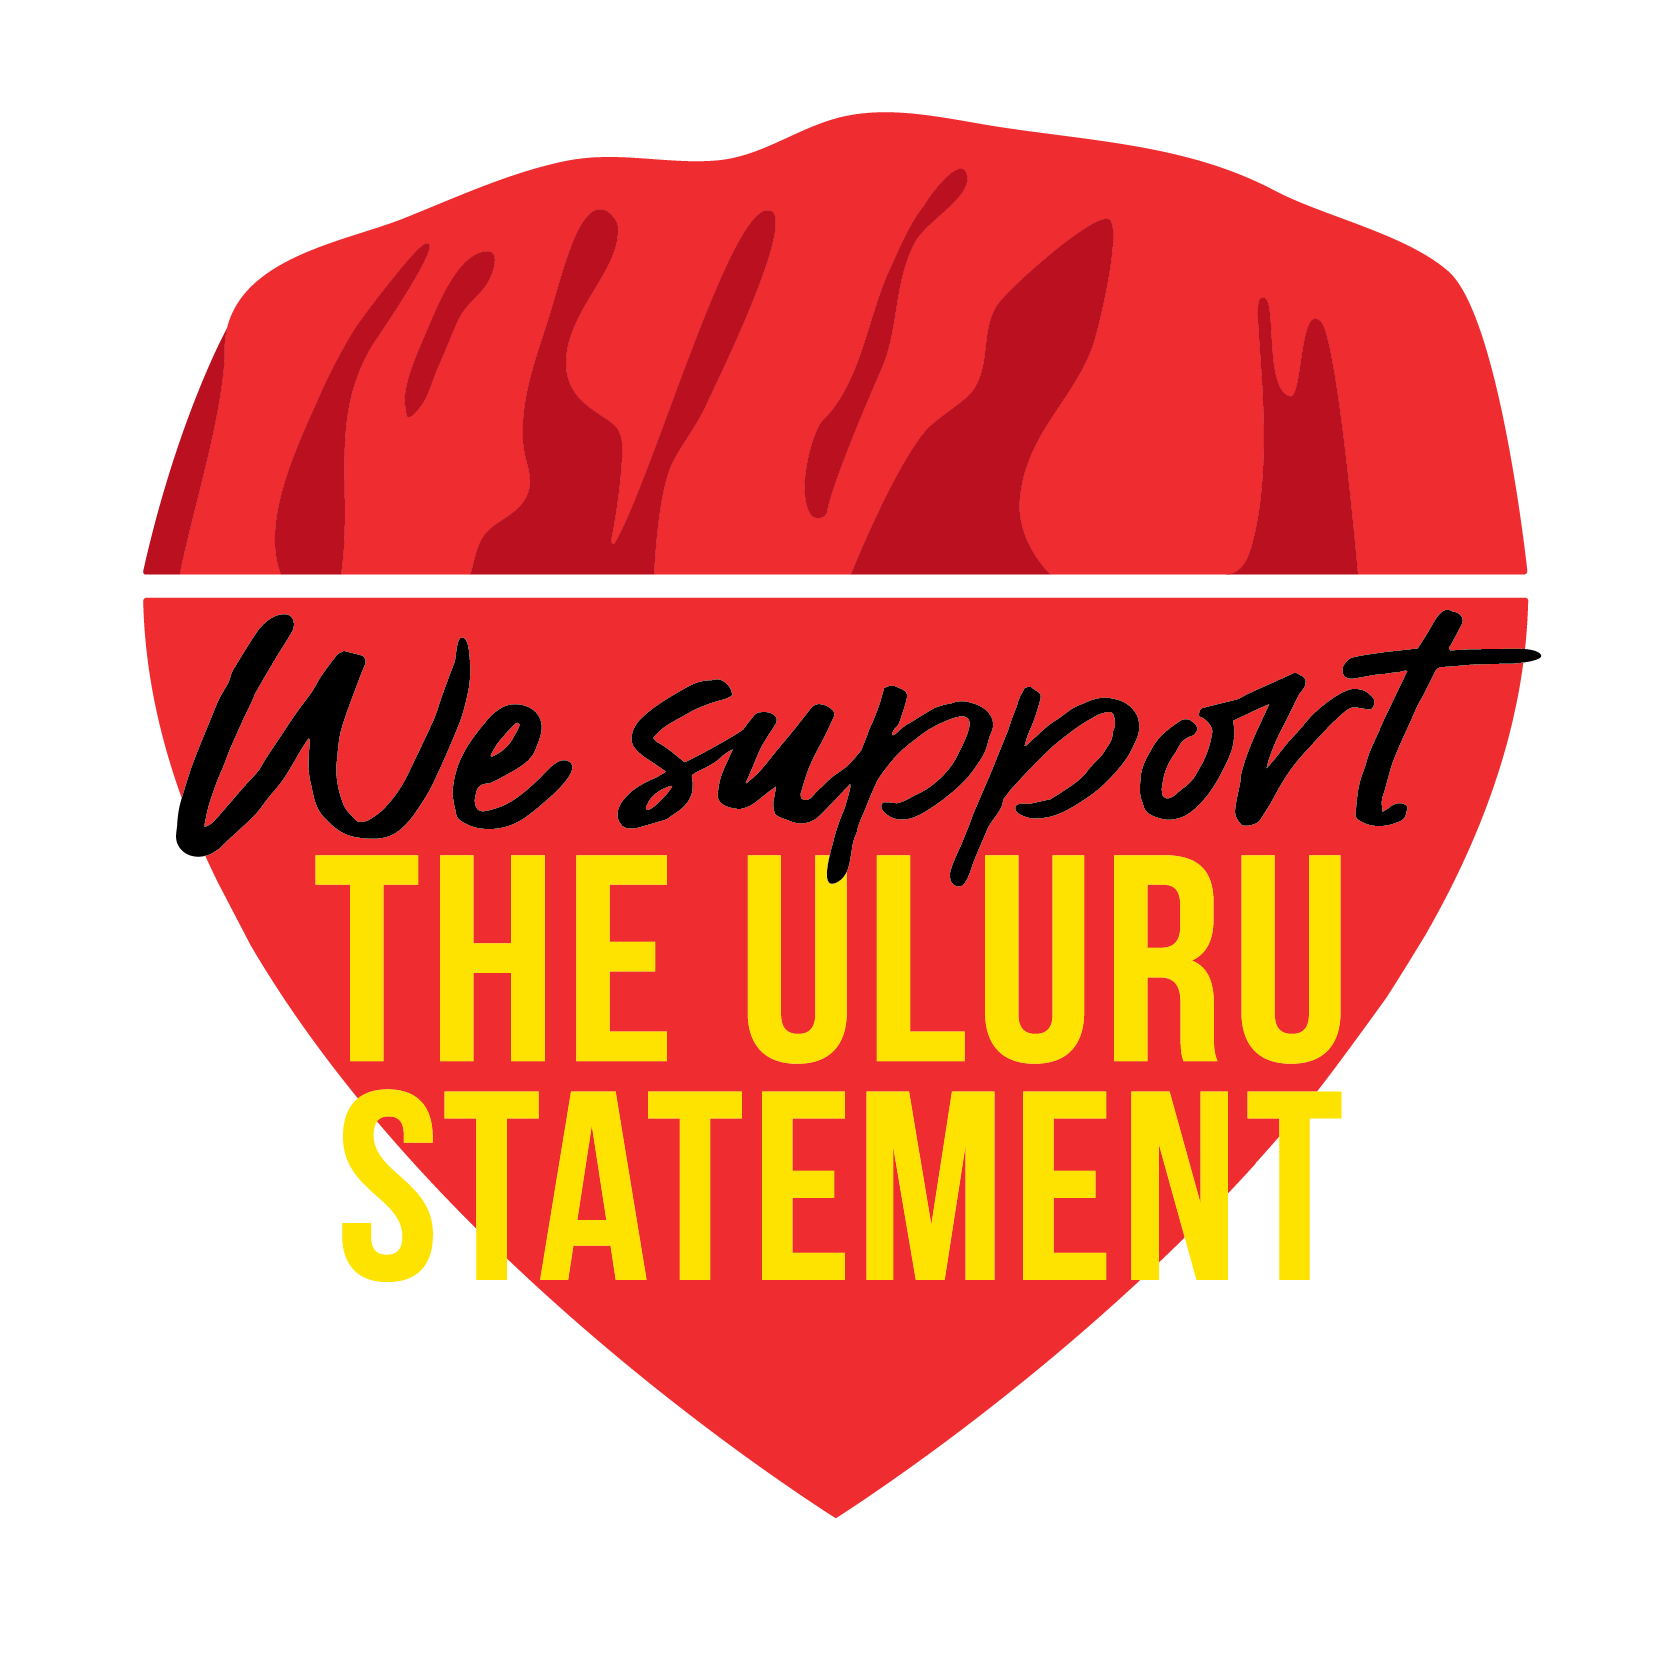 We support the Uluru Statement